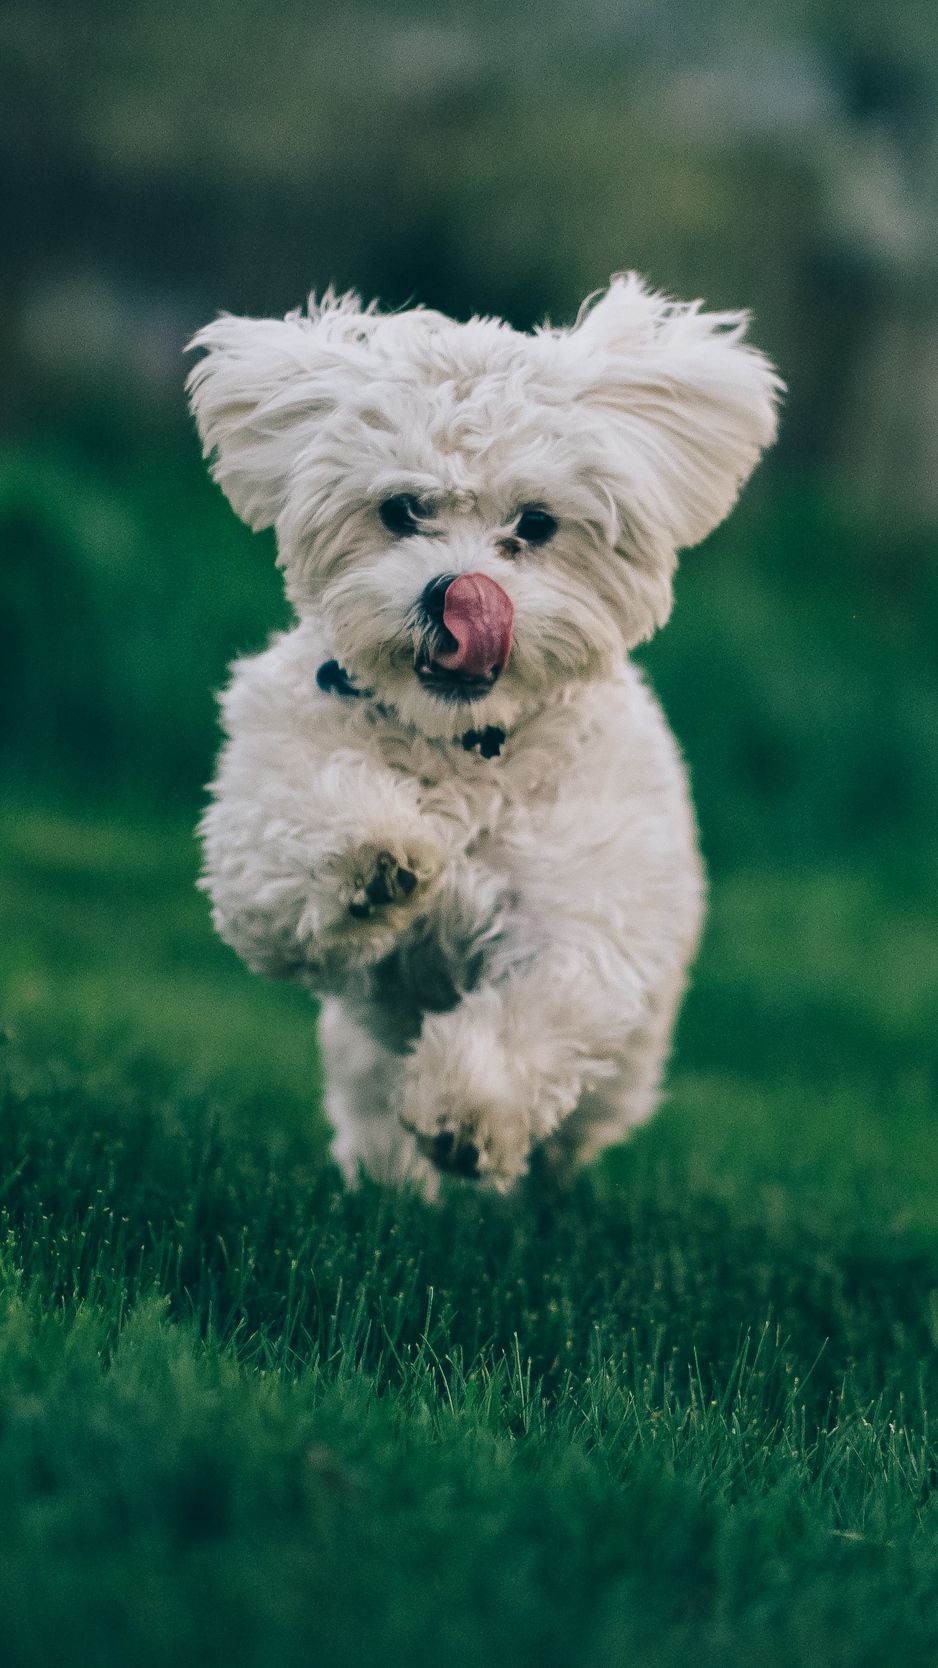 Bichon frise, dog, running, grass wallpaper. Bichon frise dogs